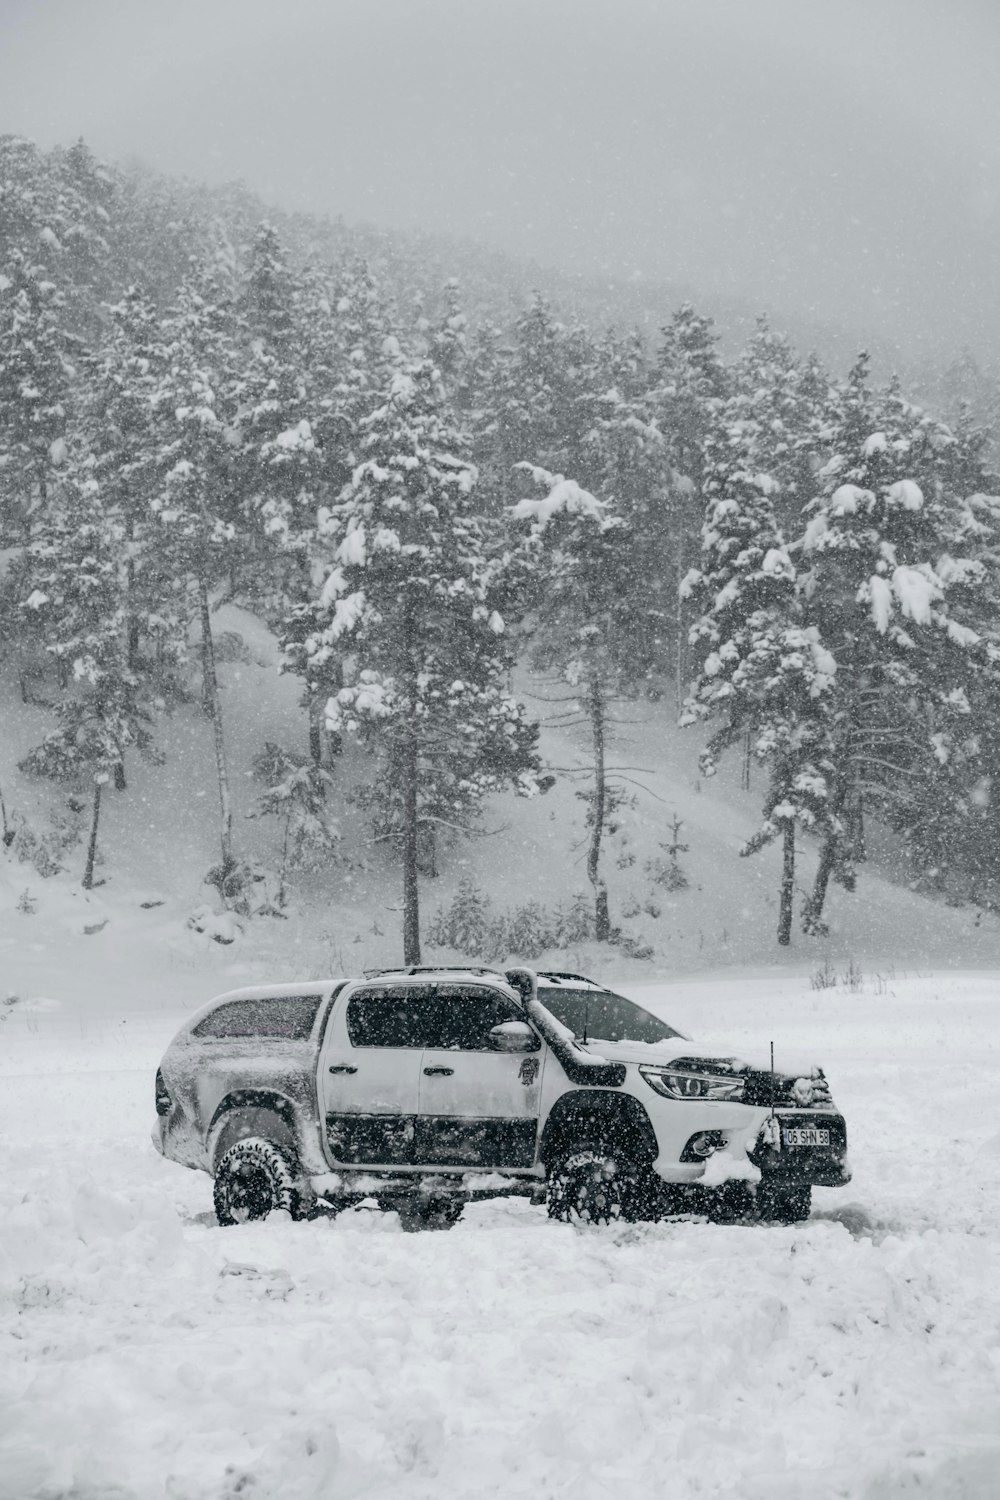 a truck is parked in a snowy field